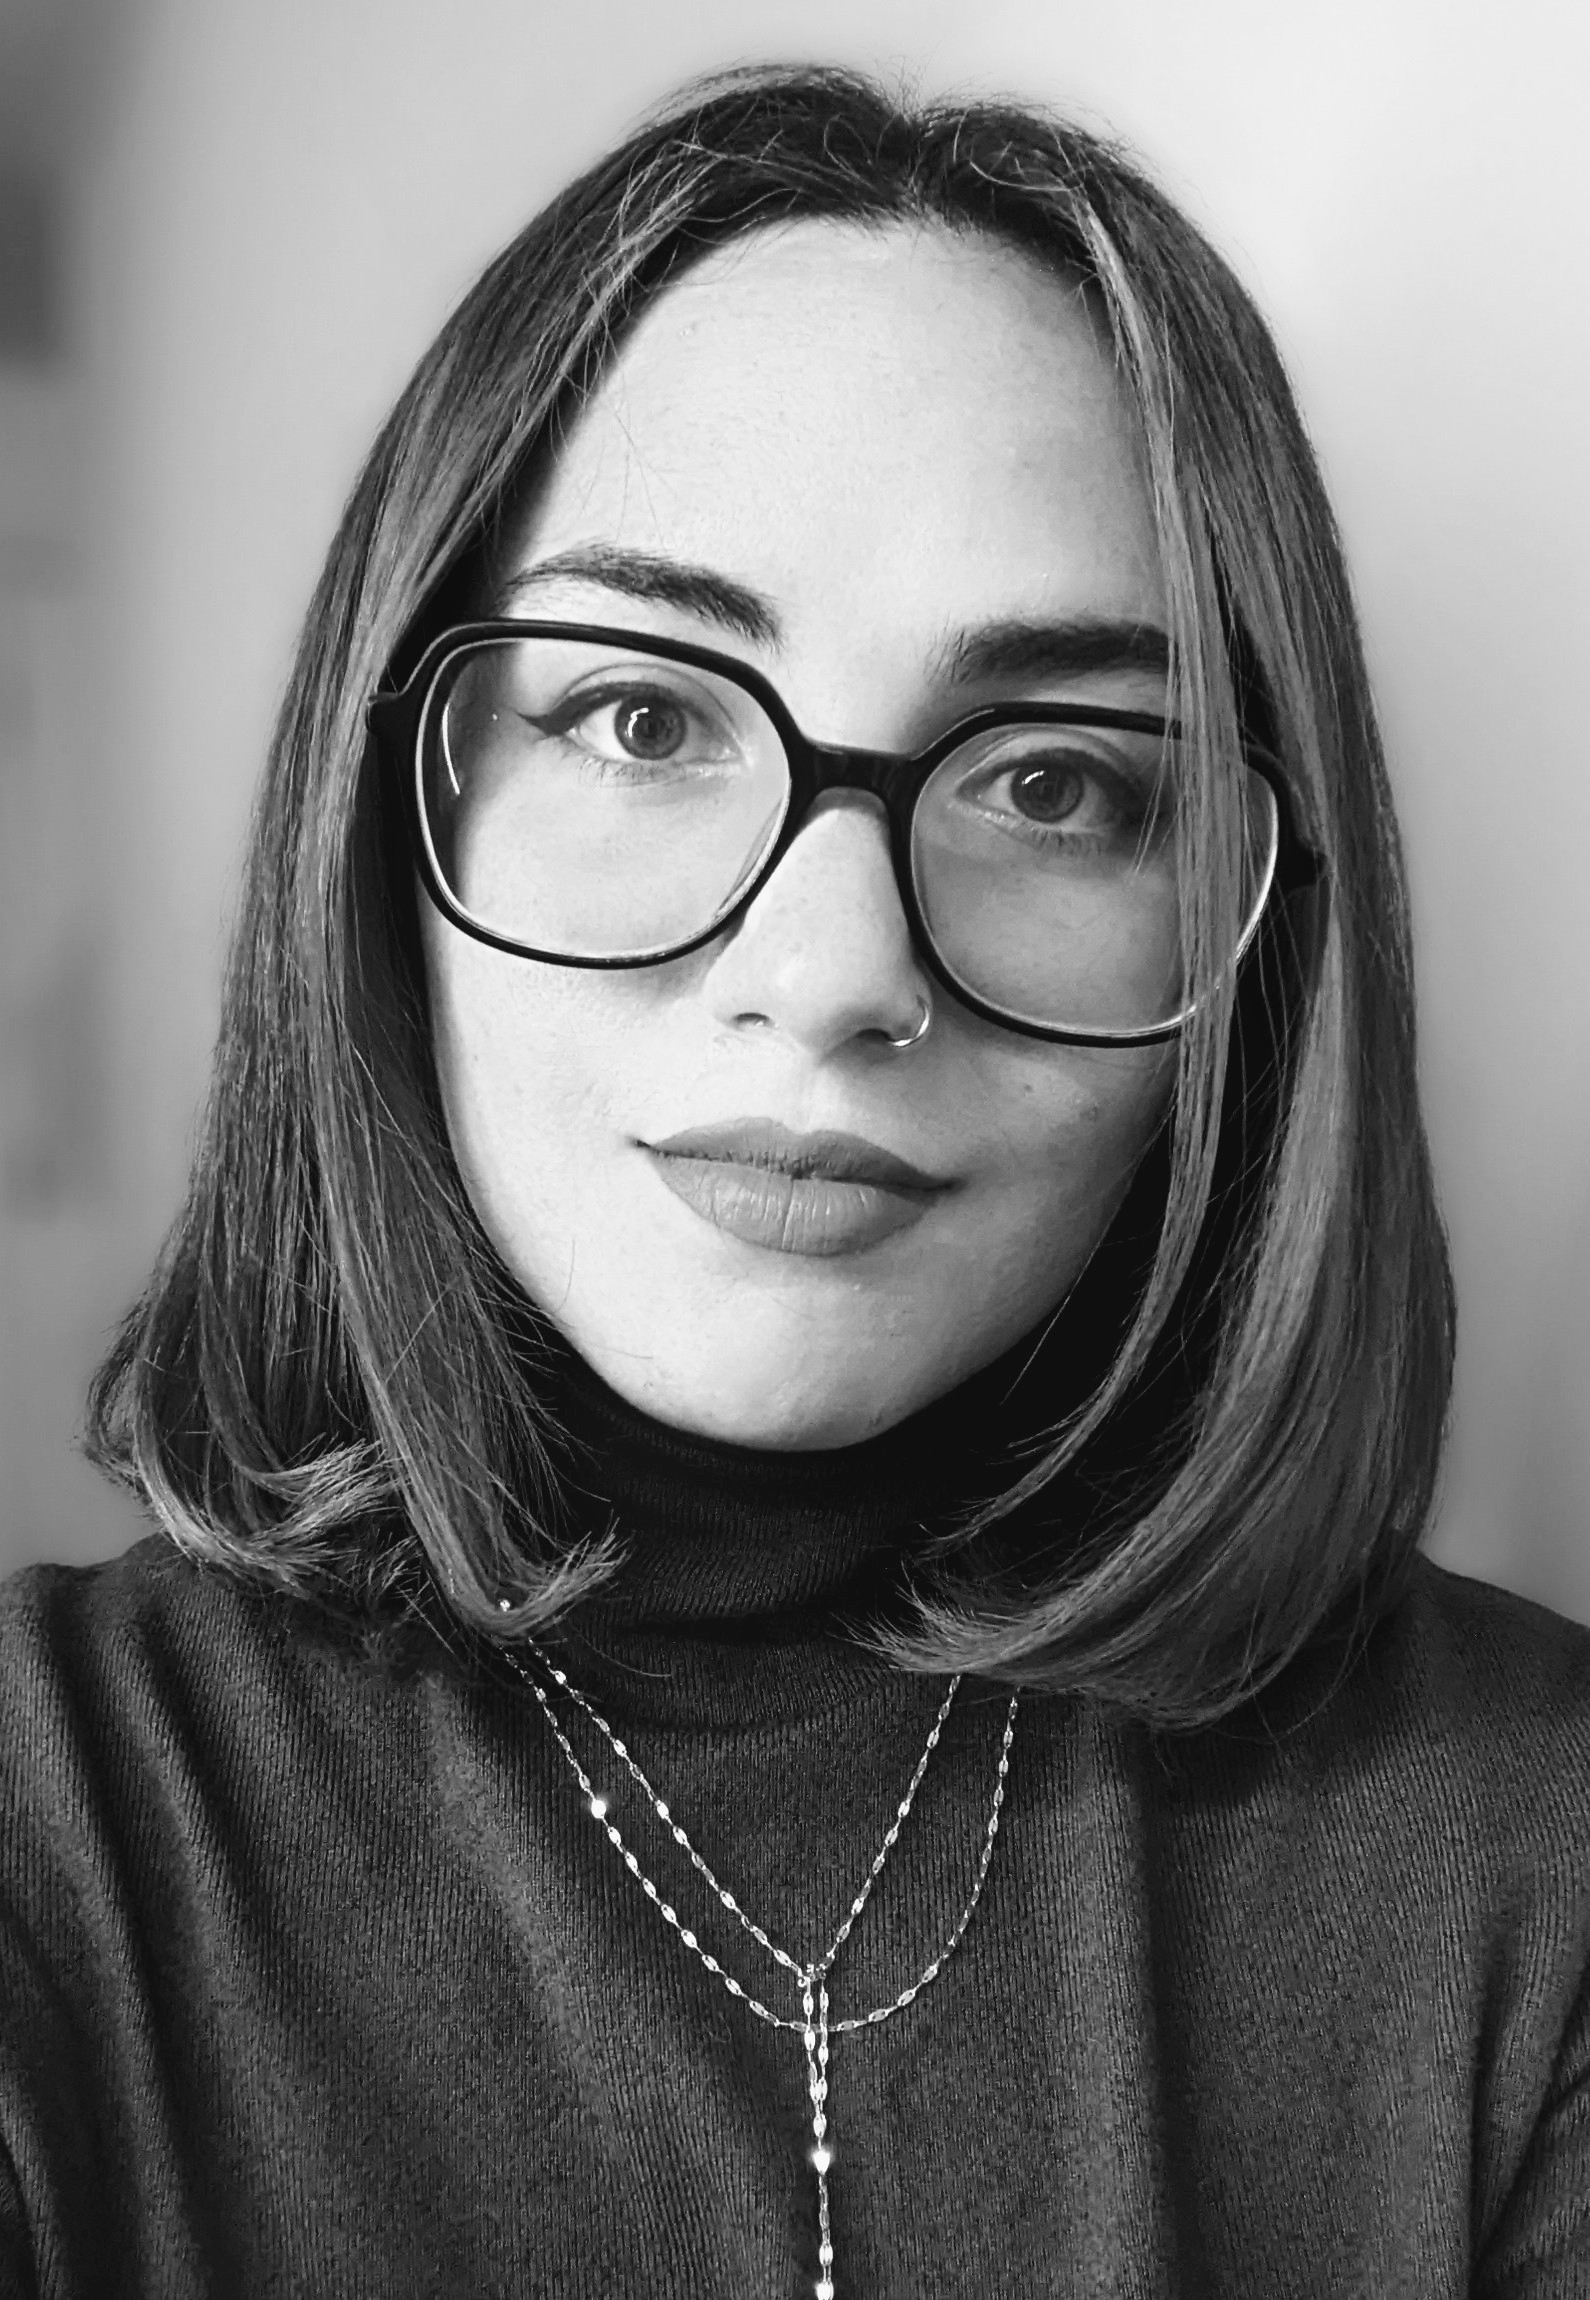 web developper student Winnie Pérez Martínez portrait